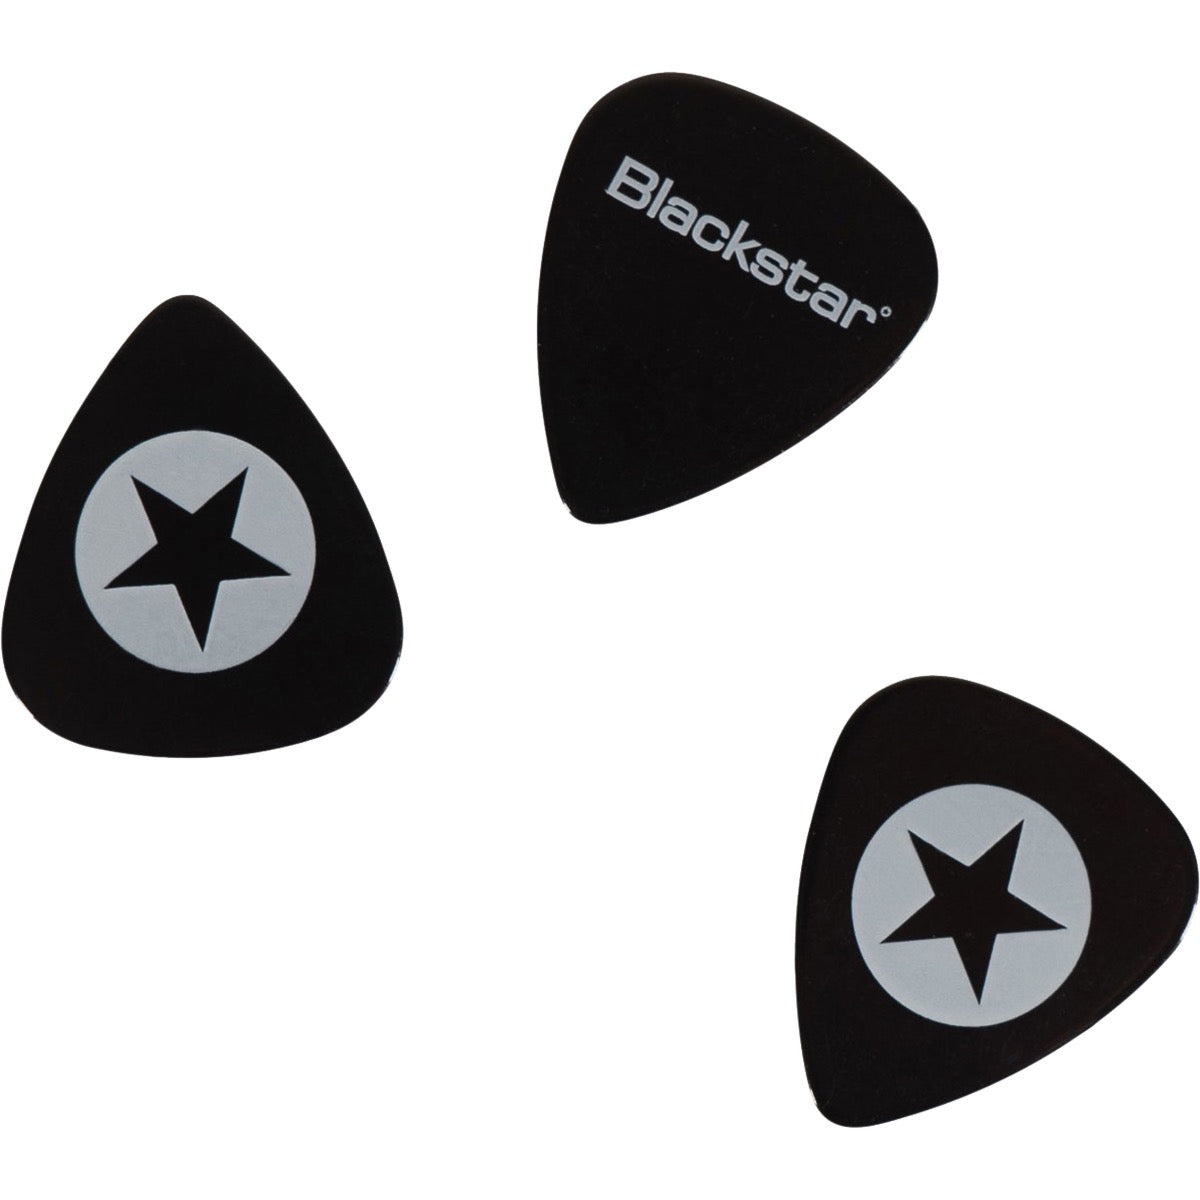 Top view of three Blackstar medium guitar picks